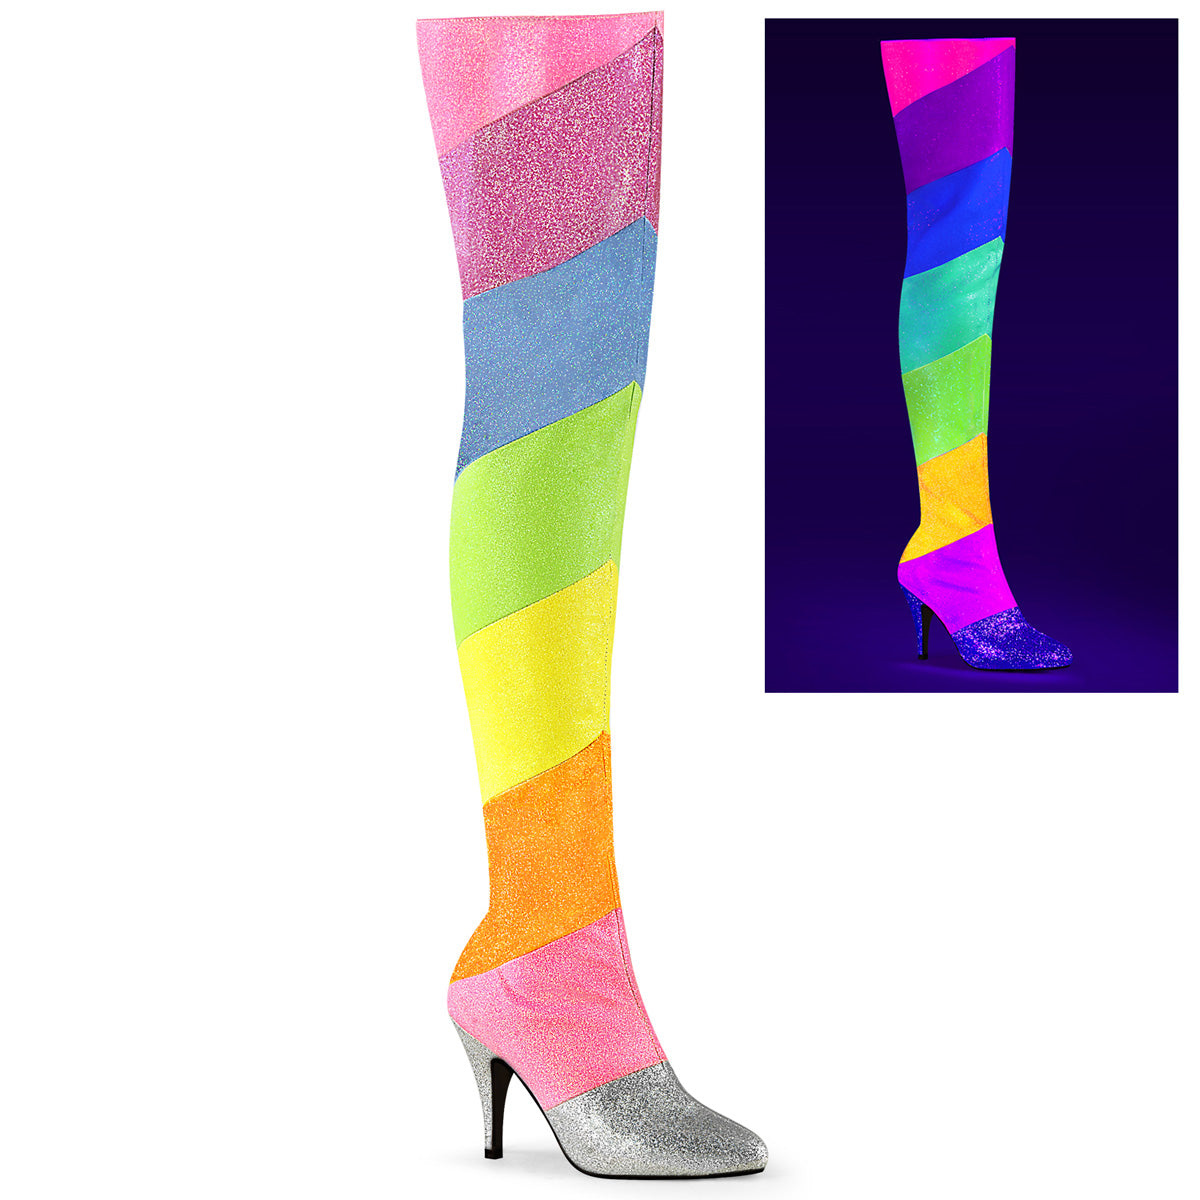 4 Inch Heel DREAM-3012RBG Rainbow Glitter